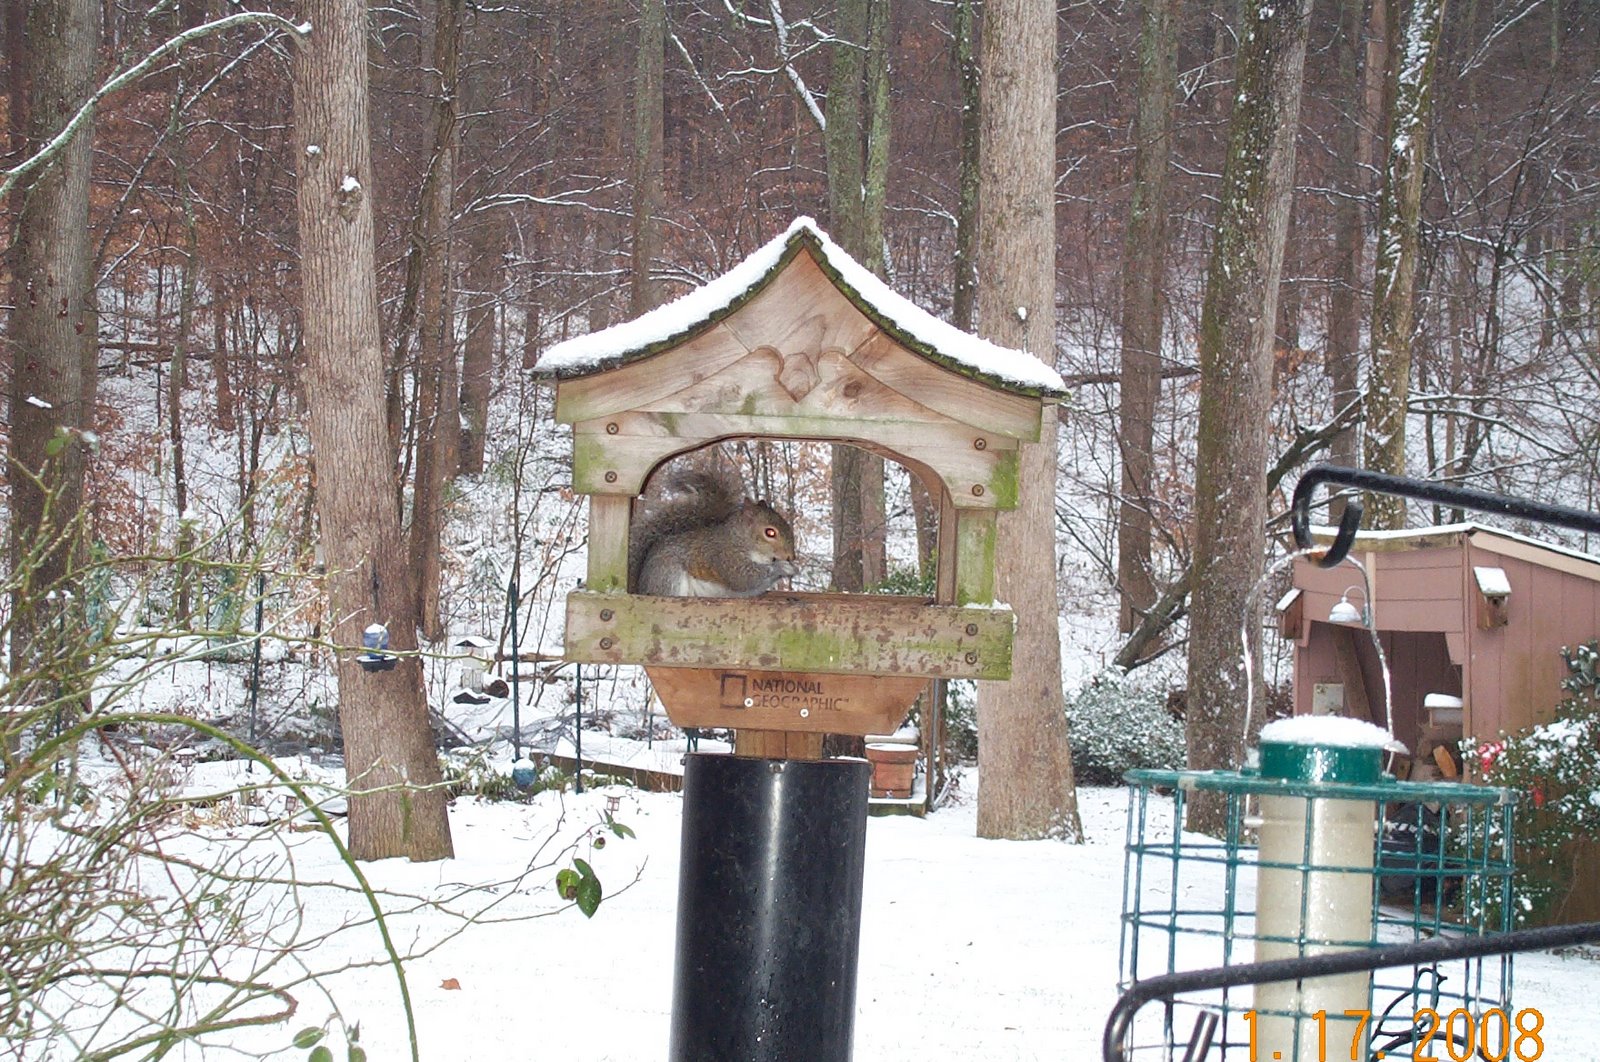 [Snow+Squirrel1.jpg]